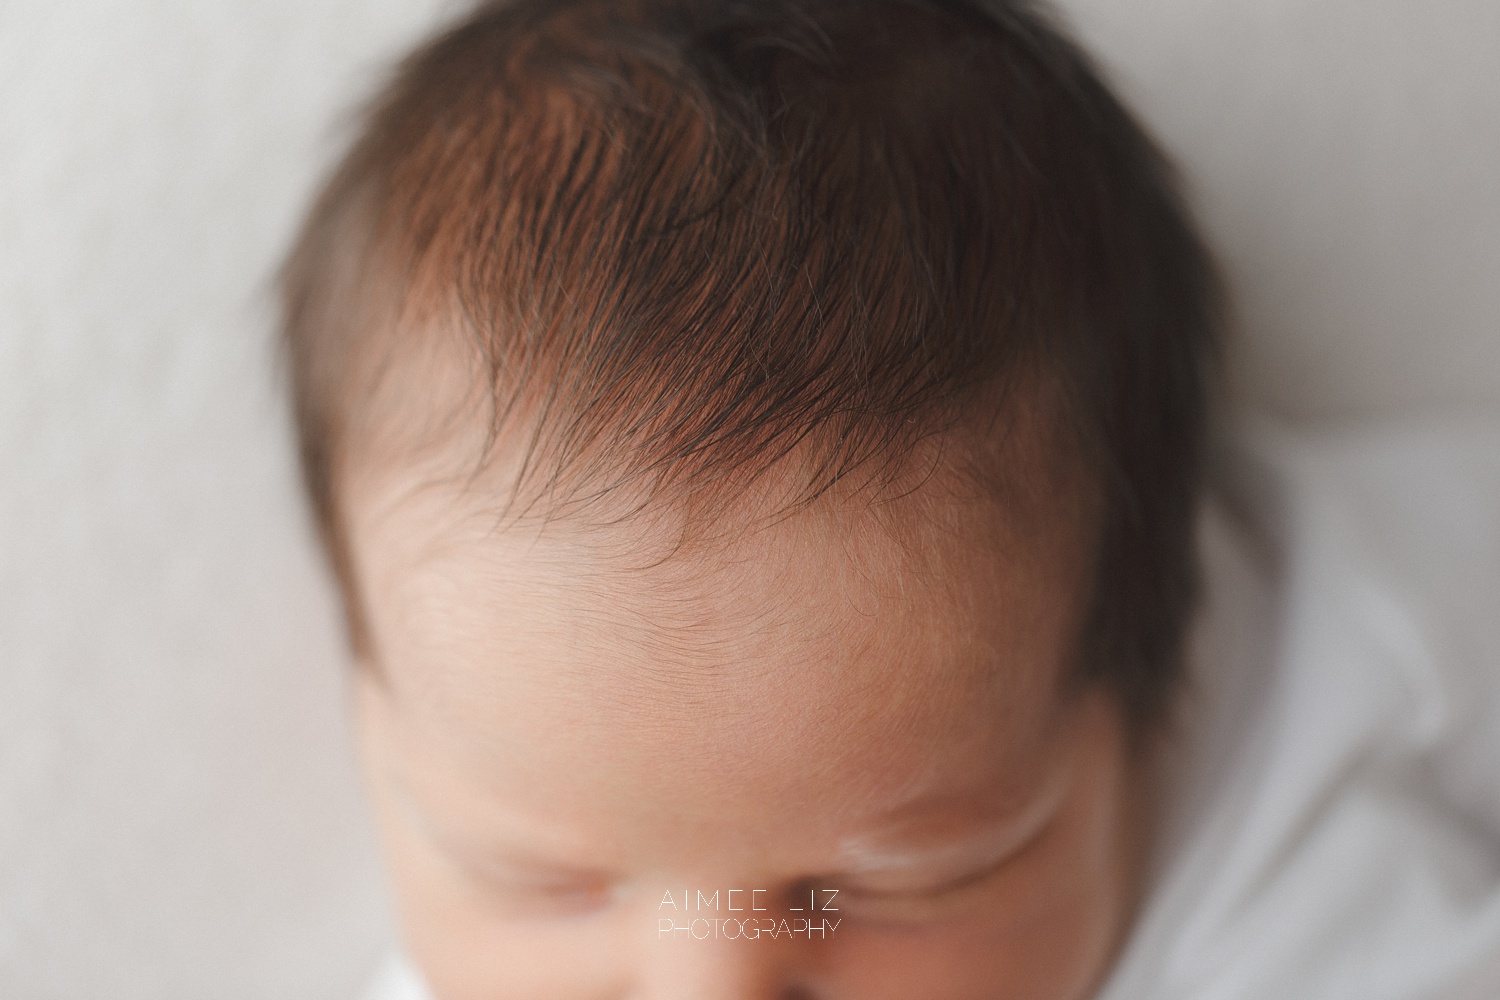 white onesie newborn photographer